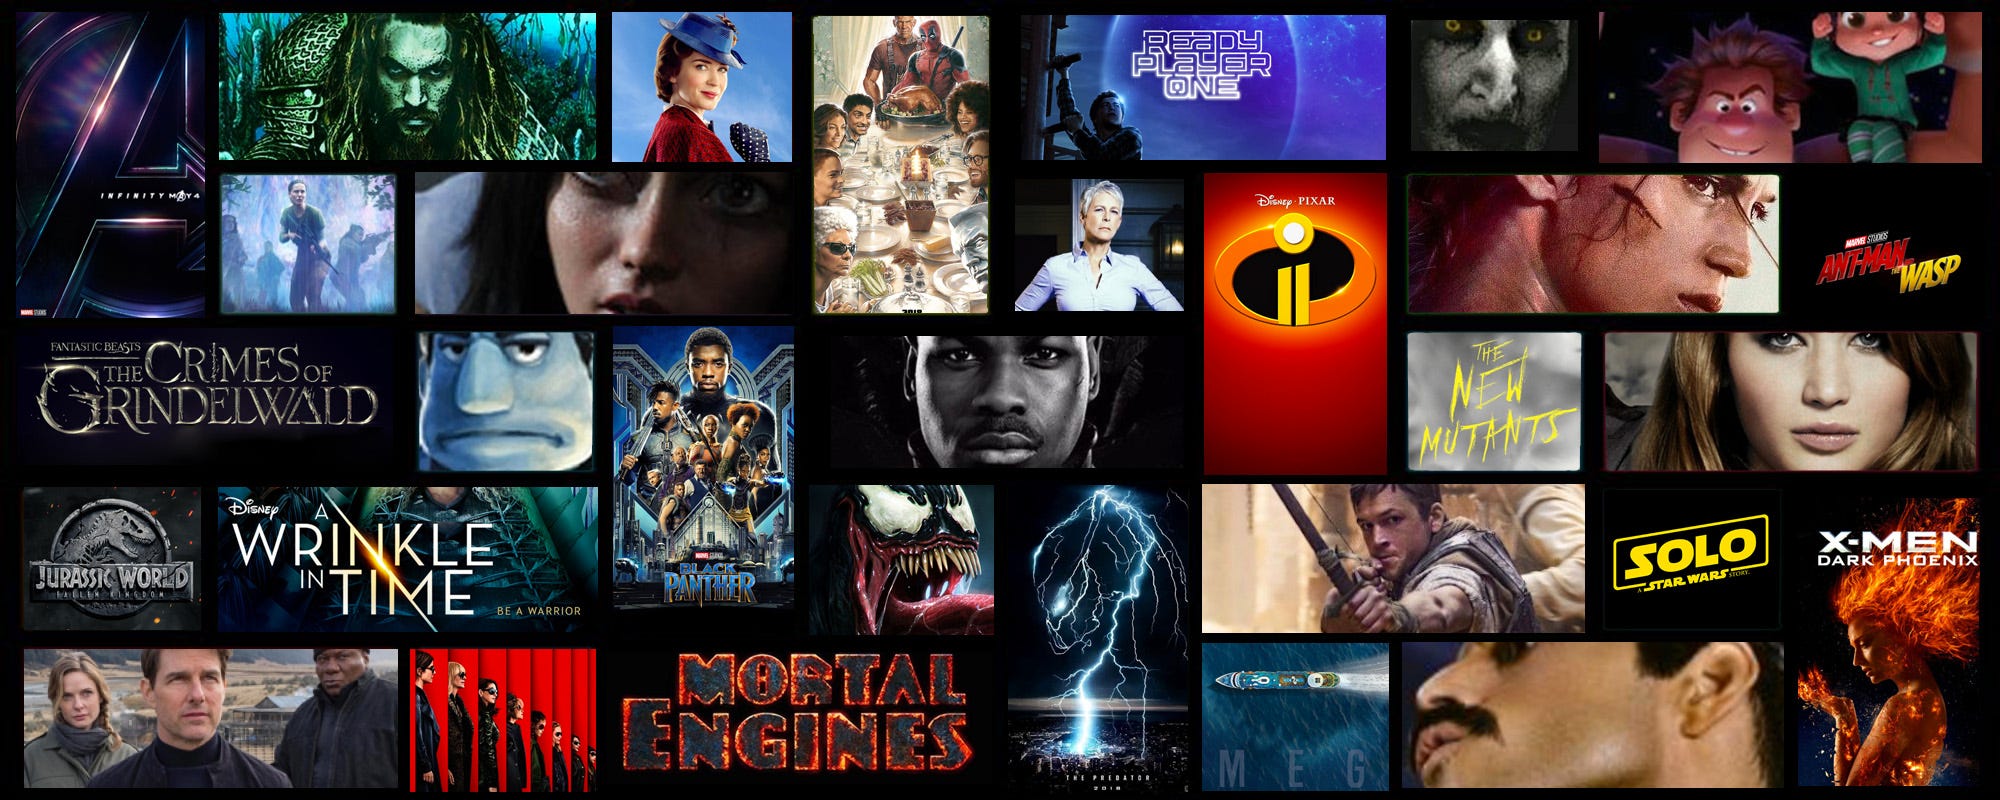 40 Movies to See in 2018 - Dans Media Digest